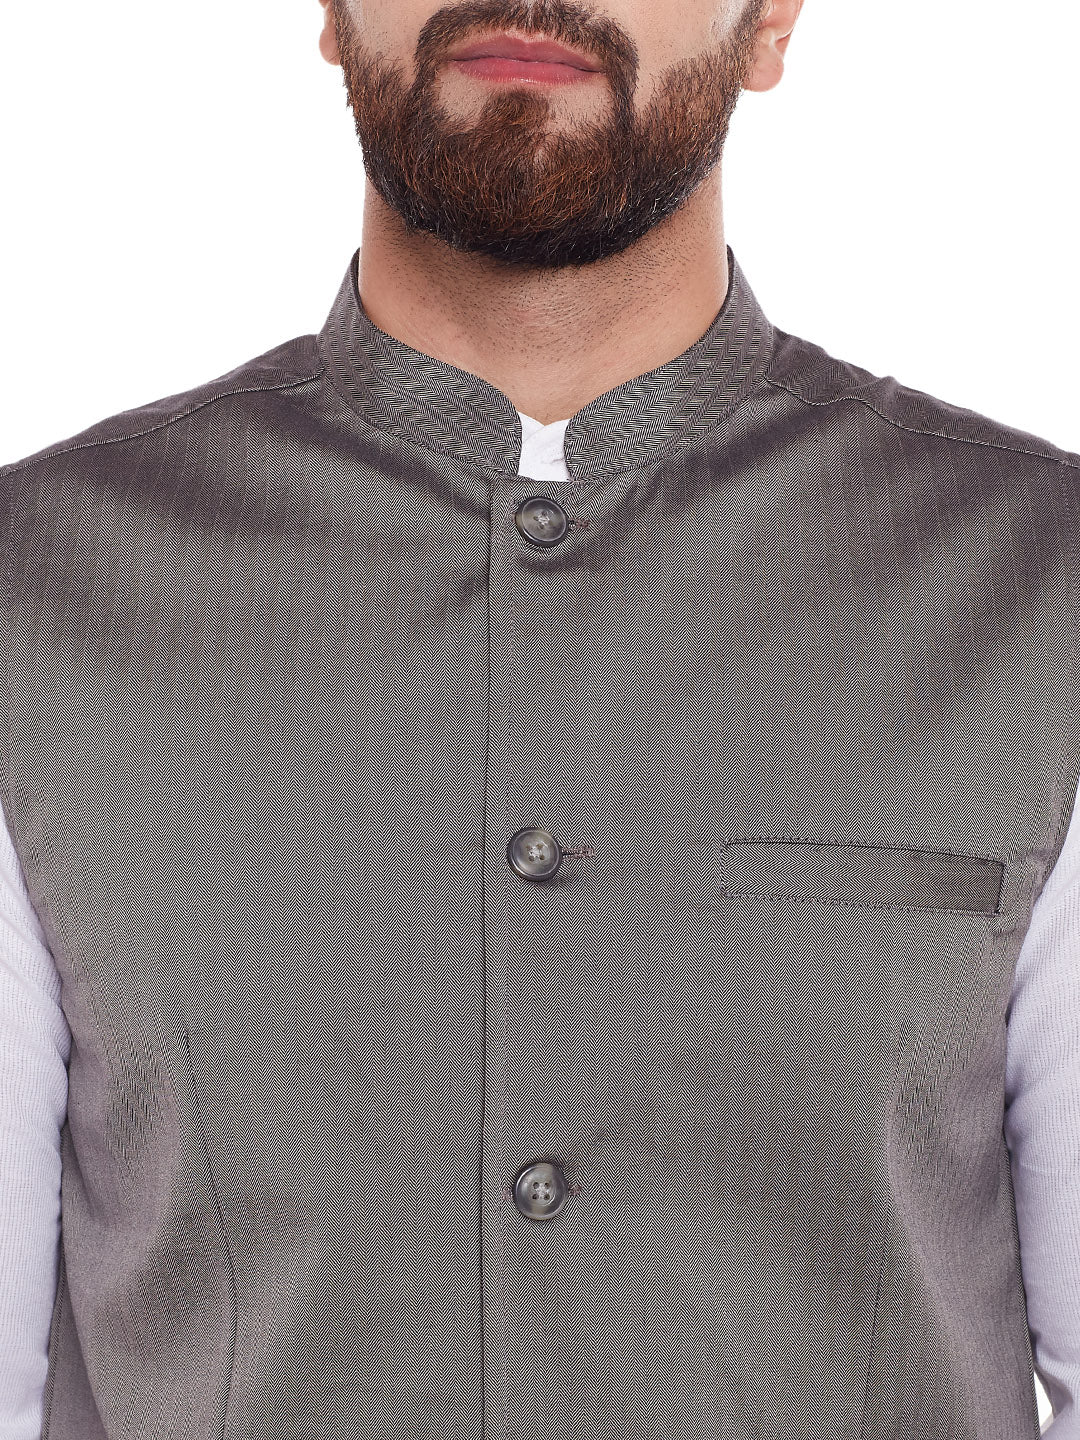 Men's Grey Nehru Jacket - Even Apparels